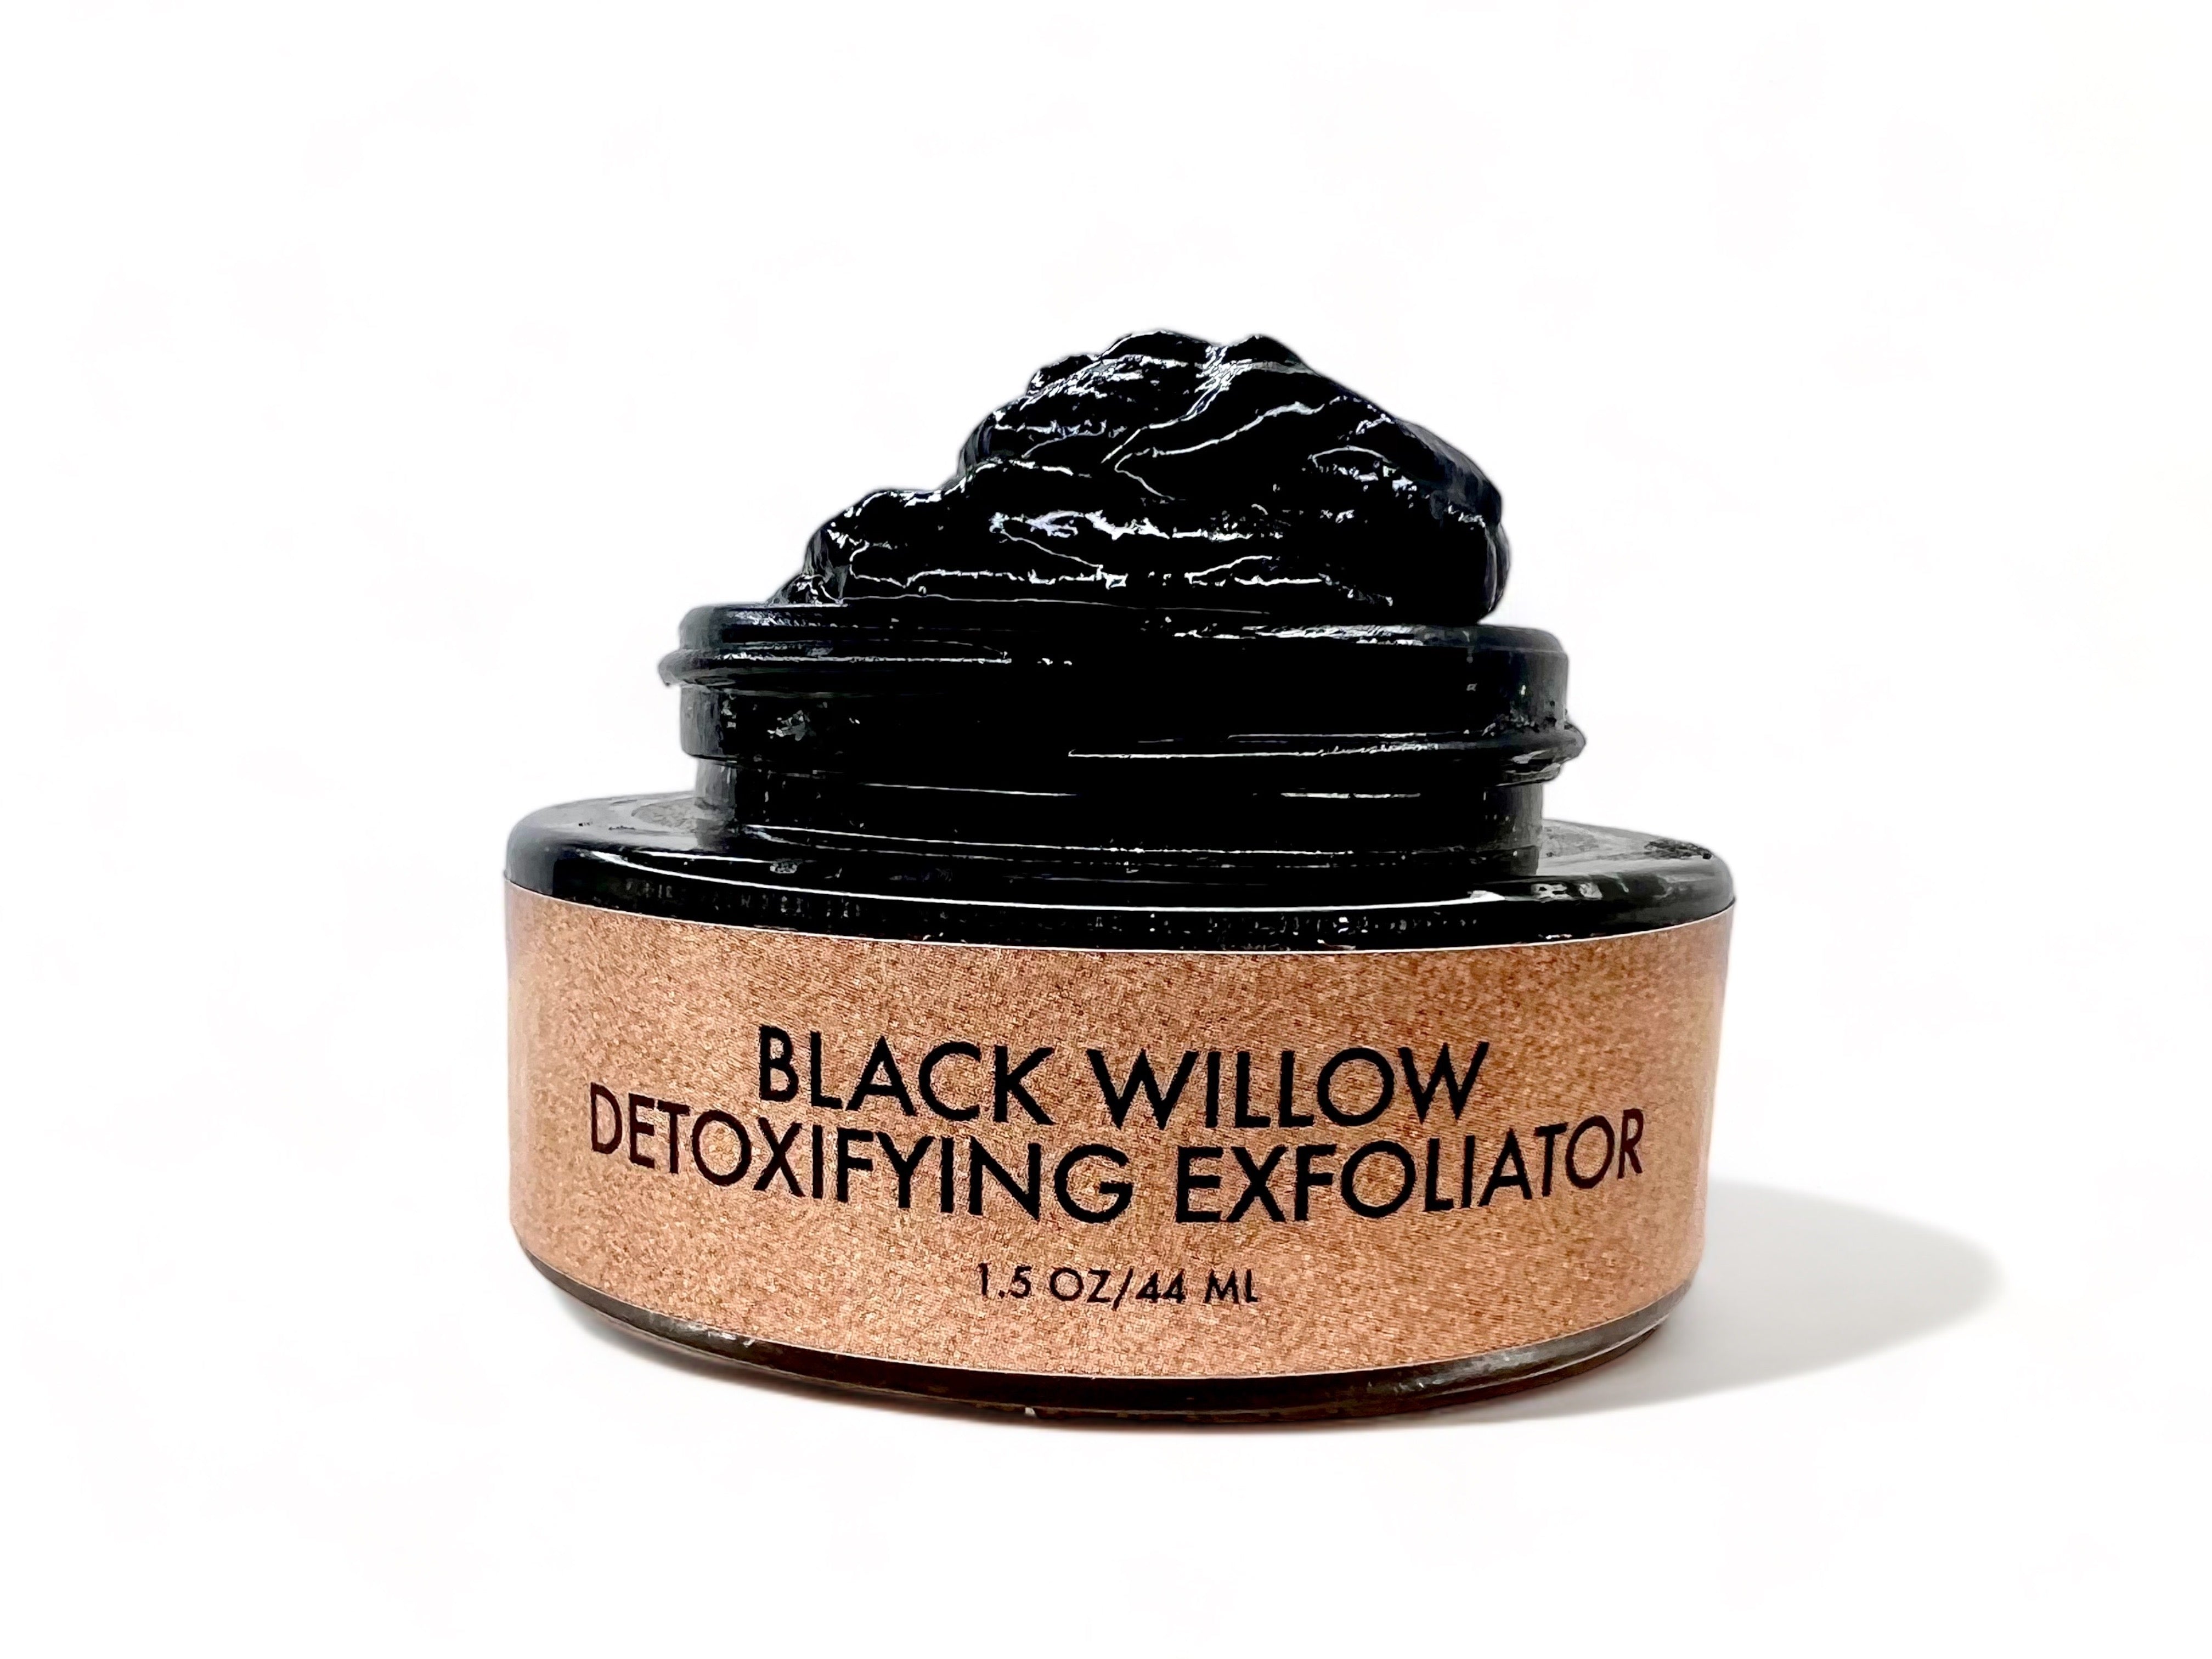 2-in-1 Black Willow Pore Detox Exfoliation Mask